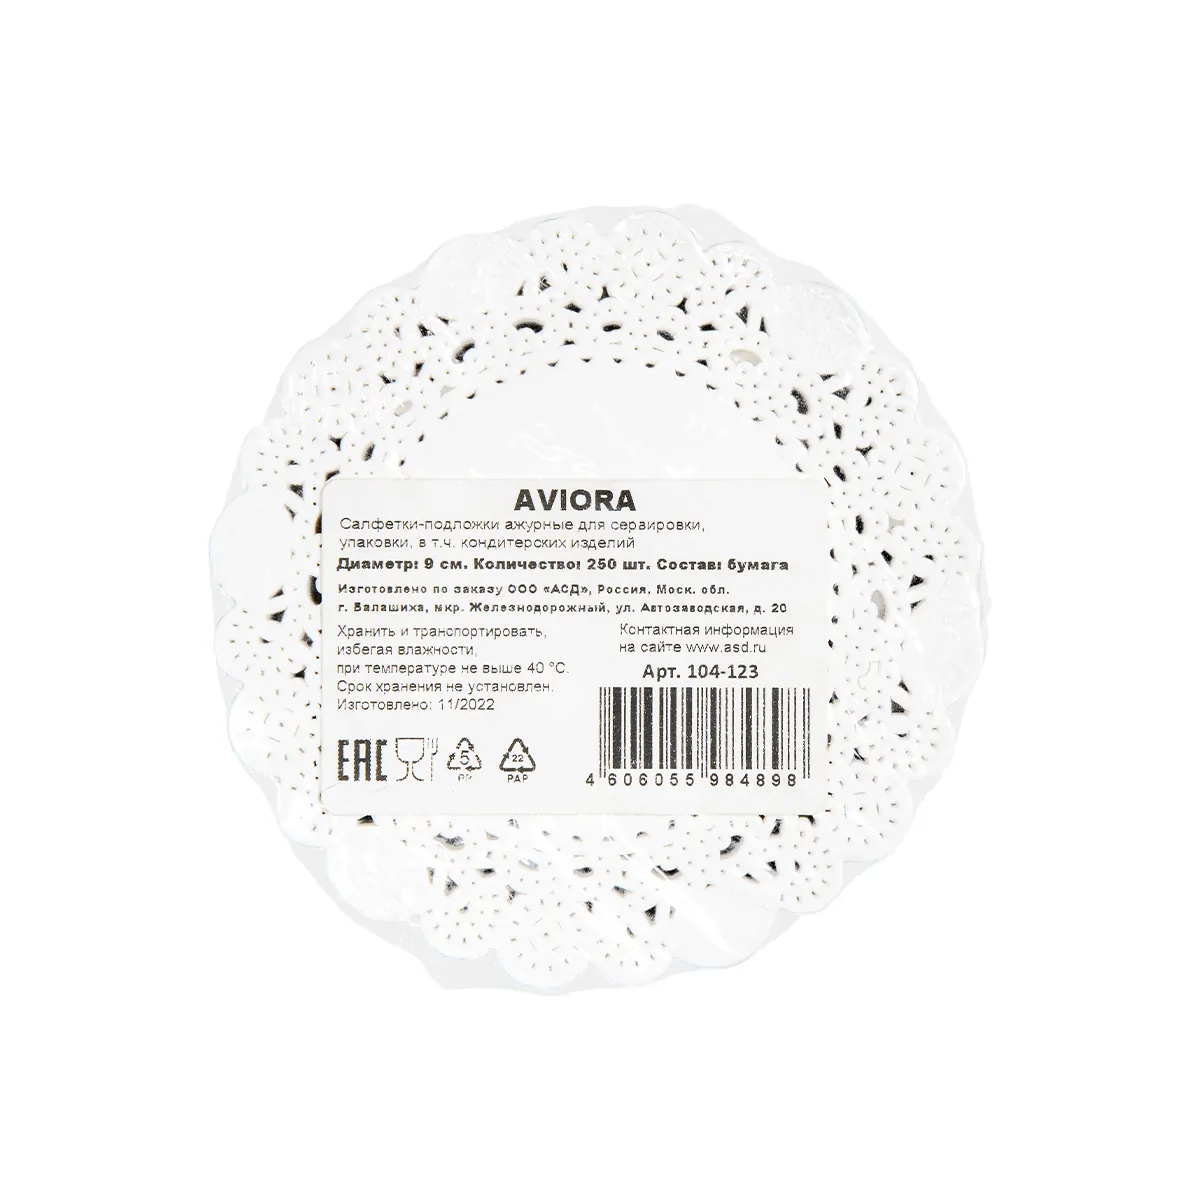 Ажурная салфетка сервировочная Aviora, круглая, диаметр 9 см, 250 шт